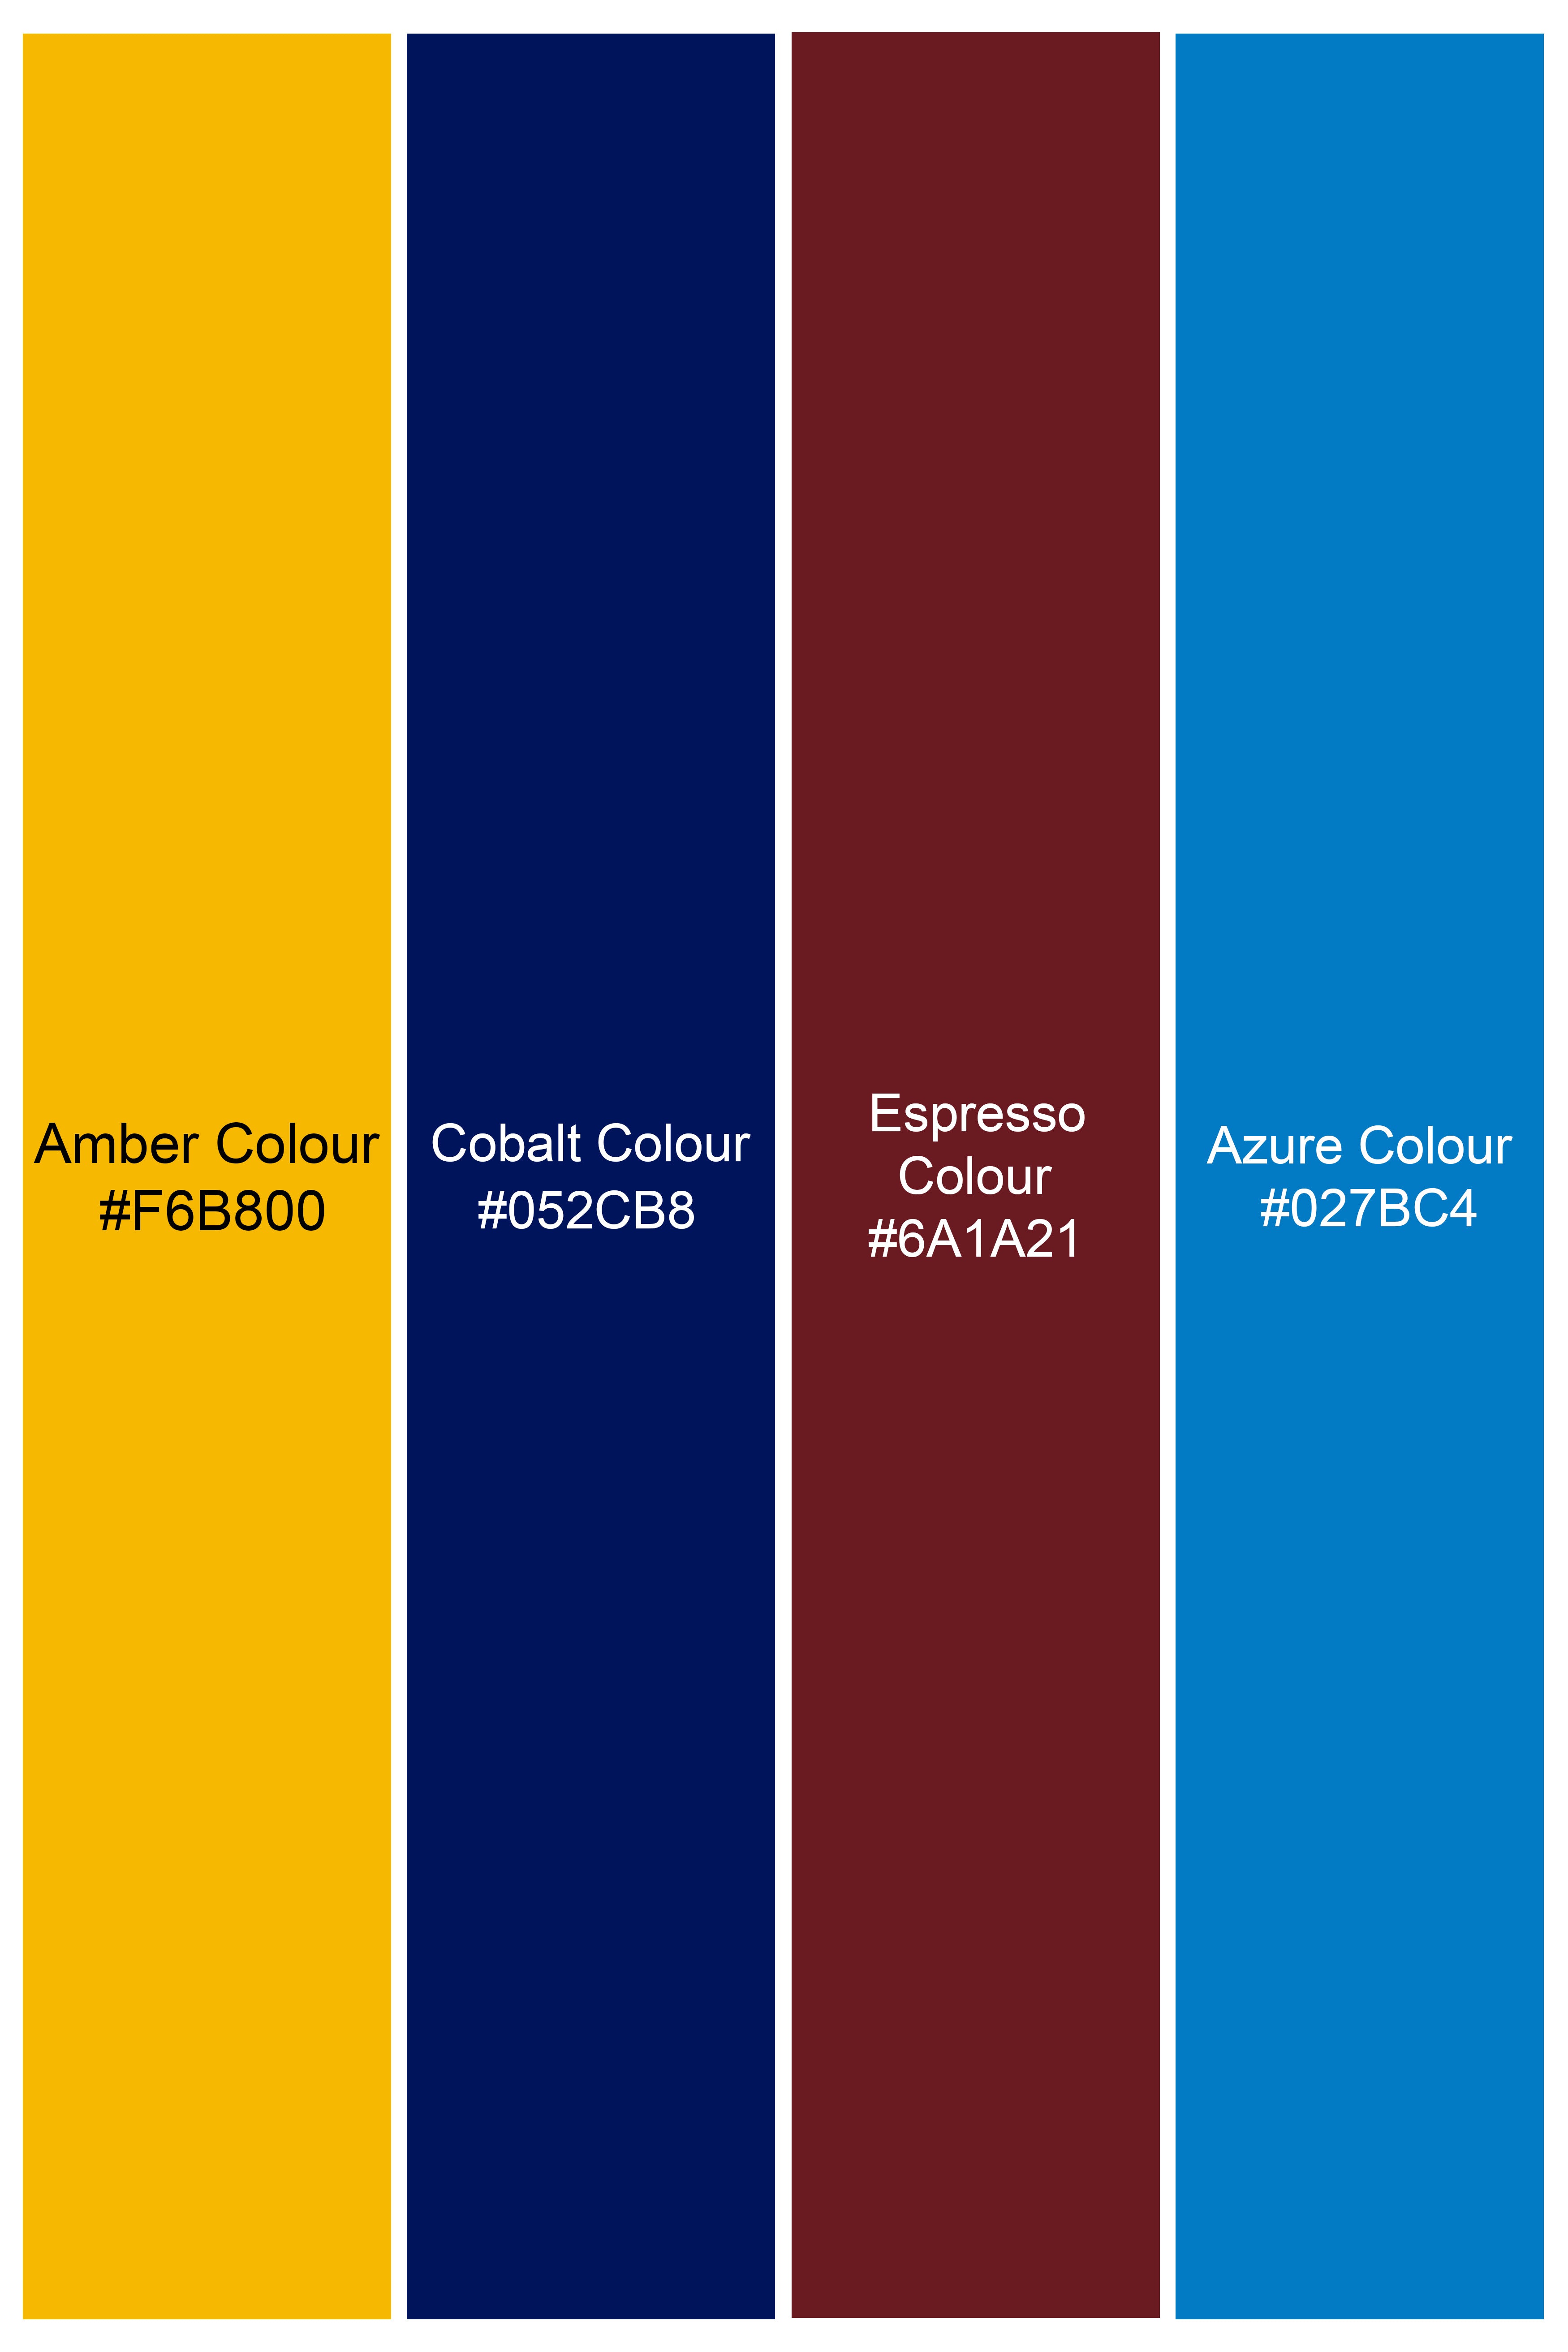 Amber Yellow with Cobalt Blue Multicolour Cotton Thread Embroidered Bandhgala Designer Blazer BL2881-BG-36, BL2881-BG-38, BL2881-BG-40, BL2881-BG-42, BL2881-BG-44, BL2881-BG-46, BL2881-BG-48, BL2881-BG-50, BL2881-BG-81, BL2881-BG-54, BL2881-BG-56, BL2881-BG-58, BL2881-BG-60